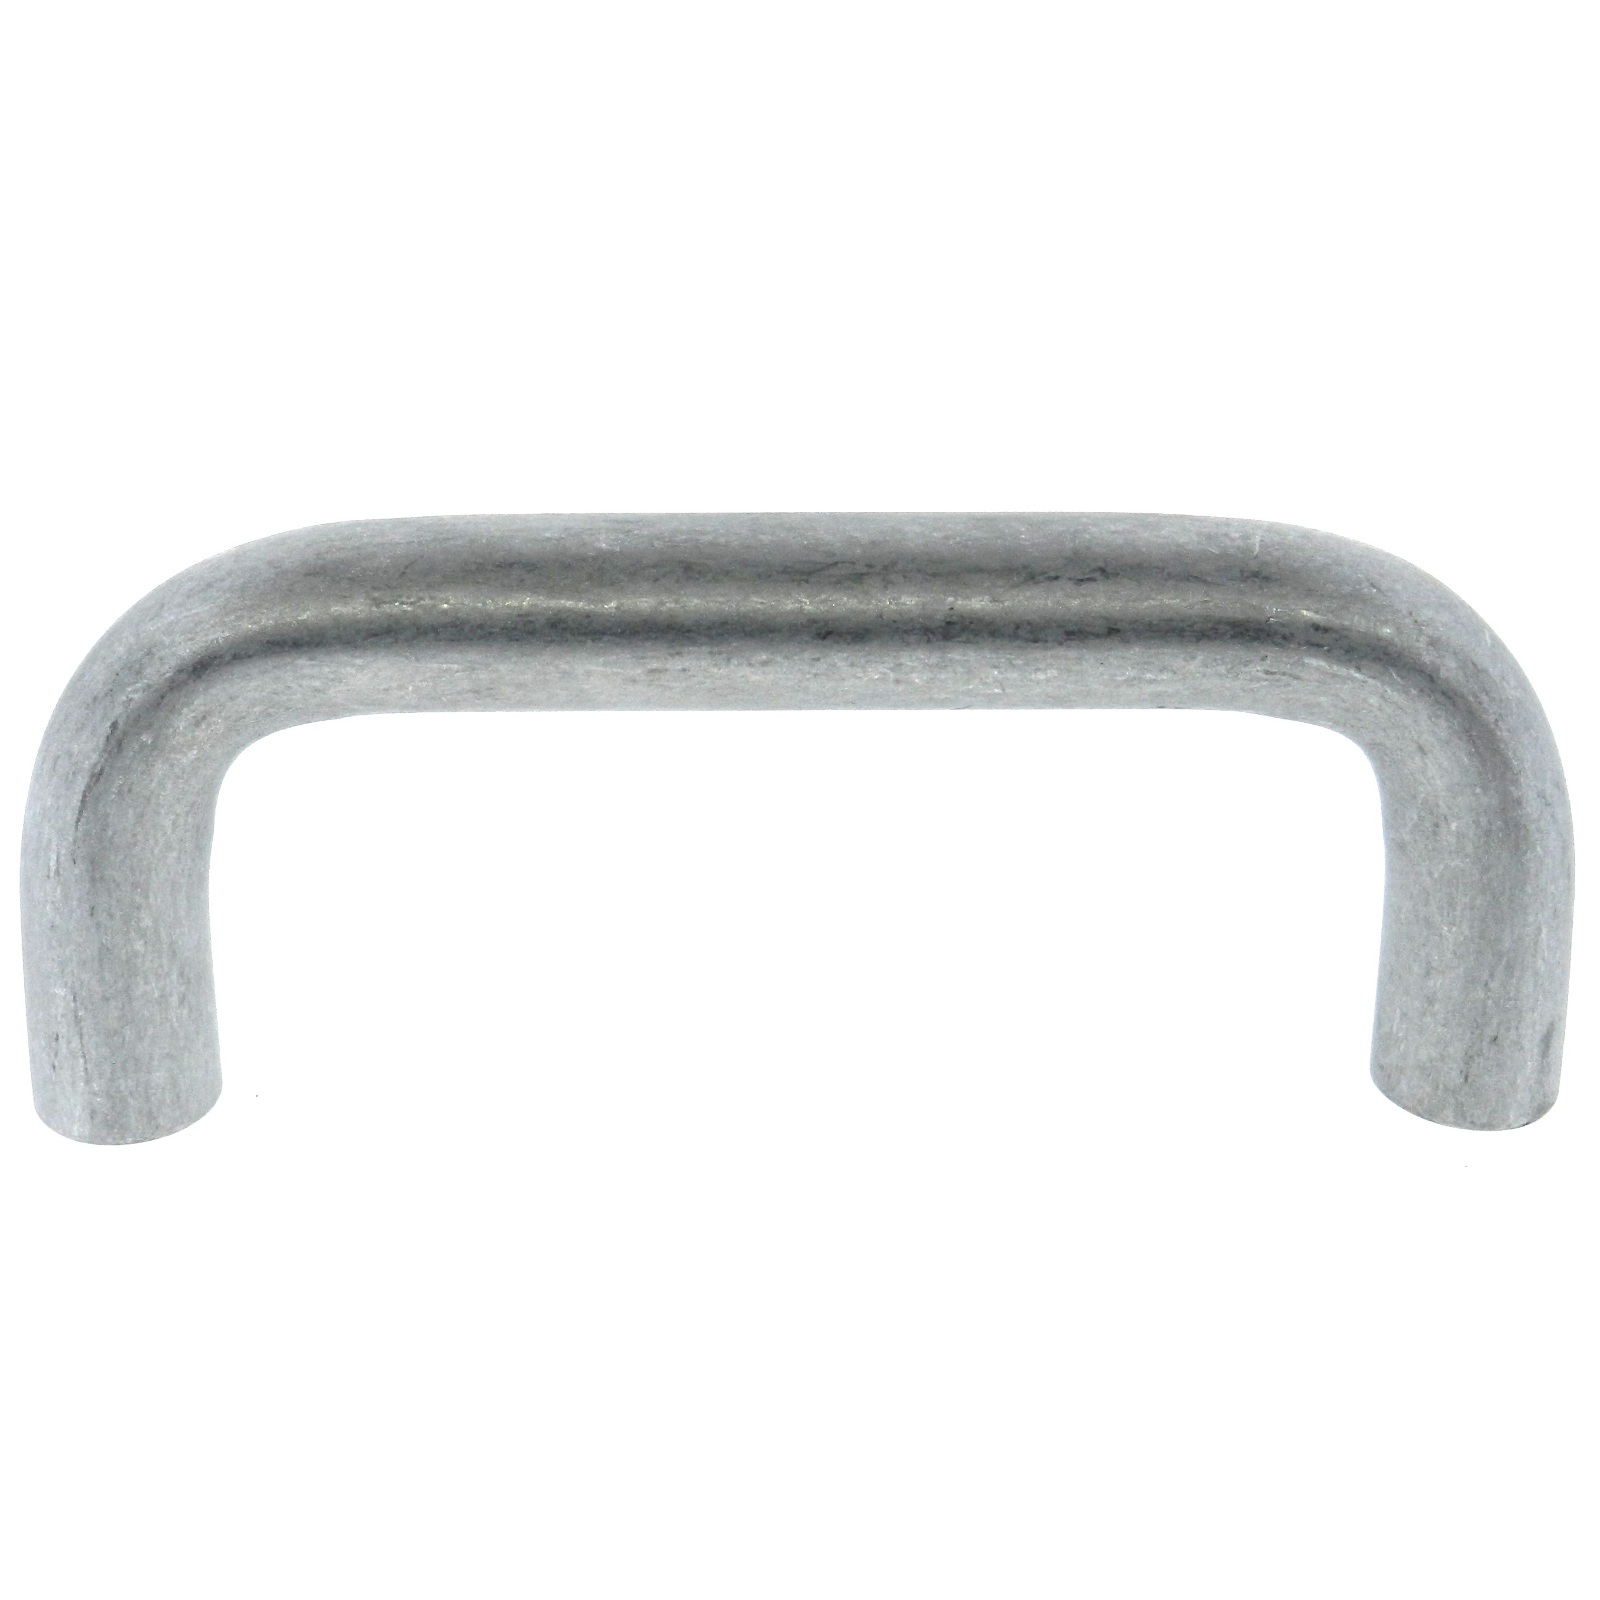 Aluminum door pull handle AM-411